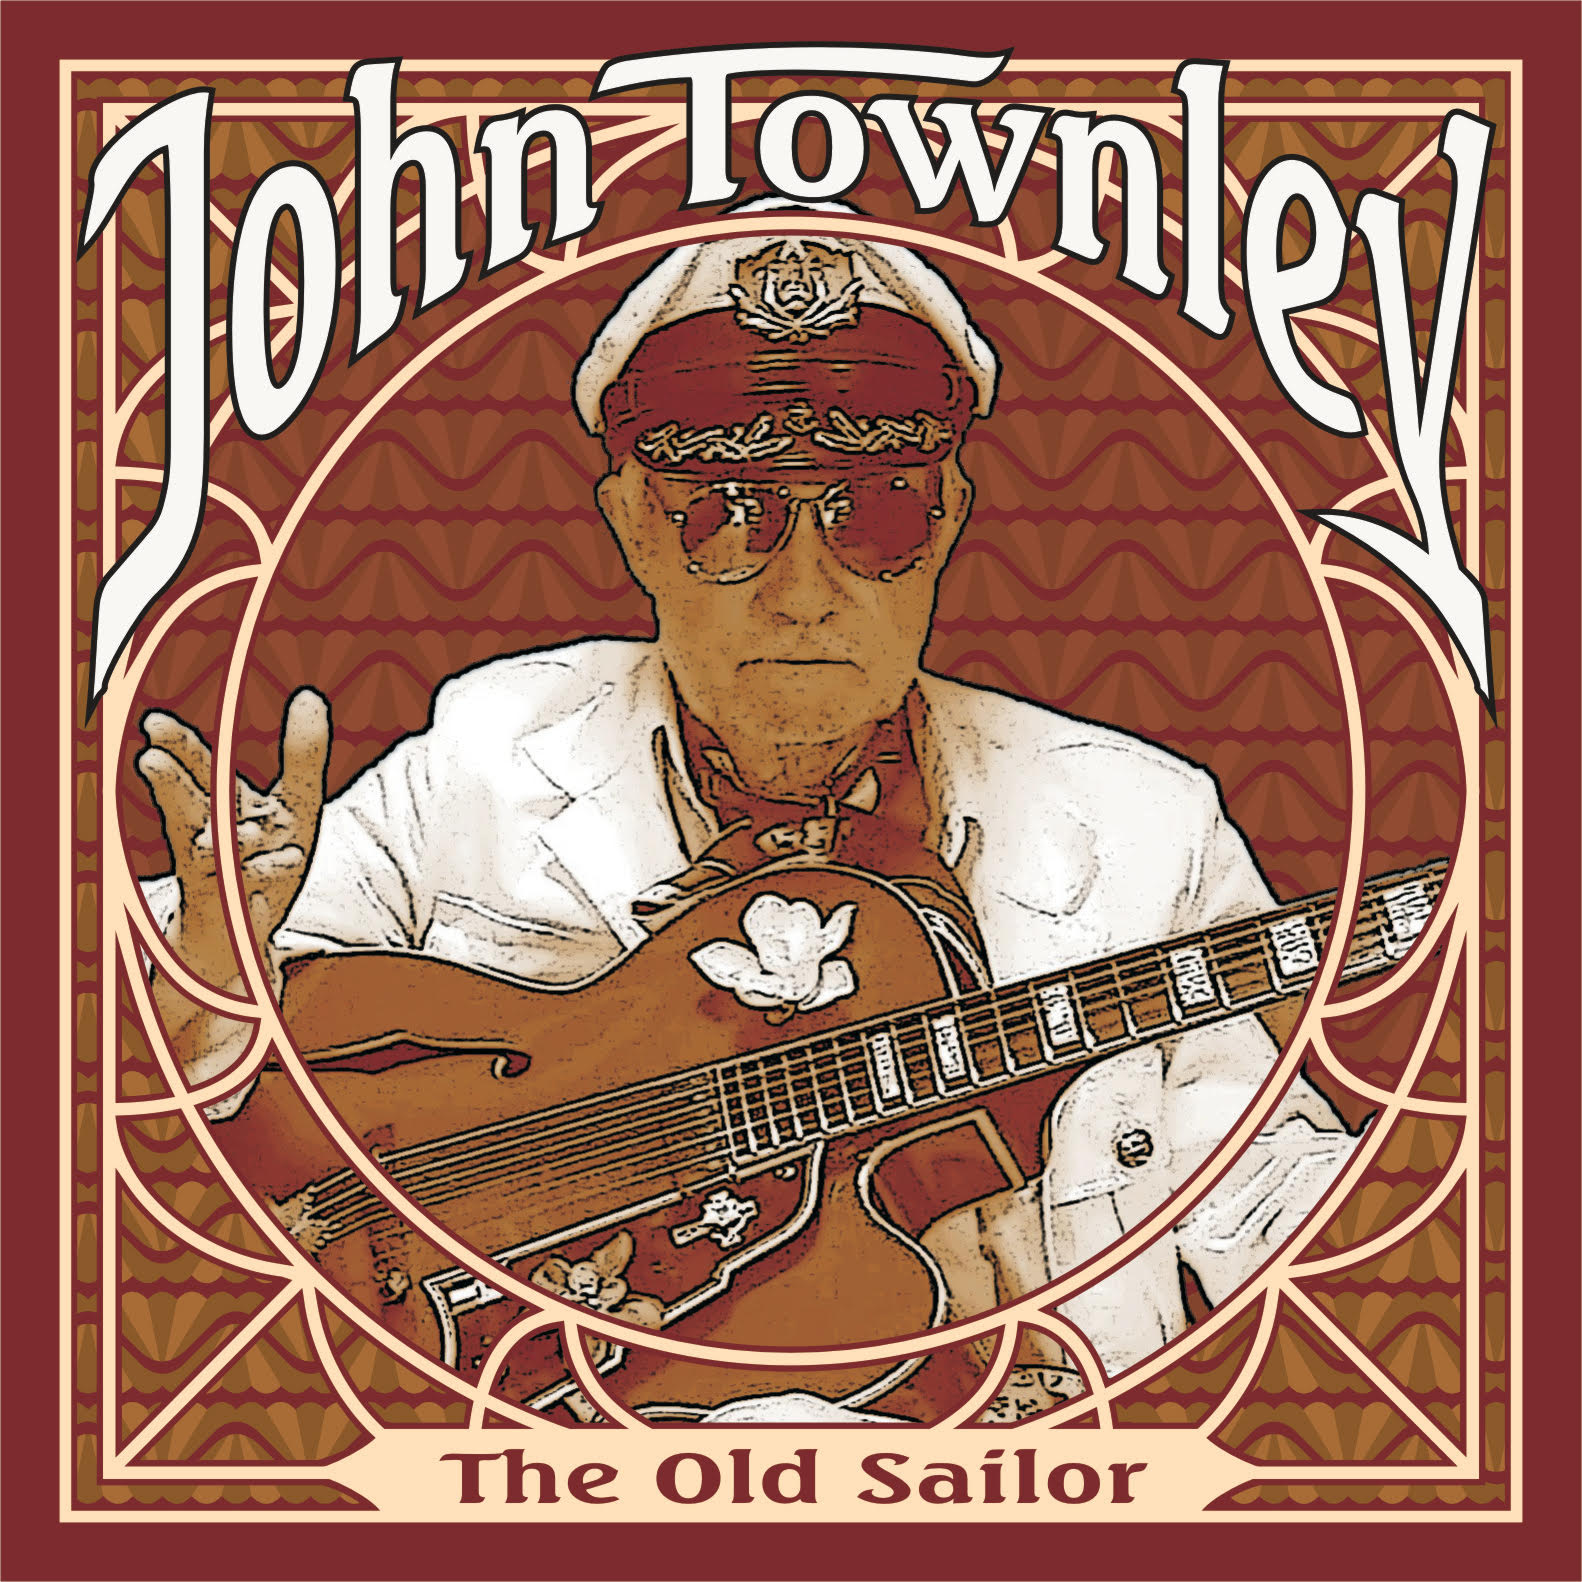 John Townley - The Old Sailor